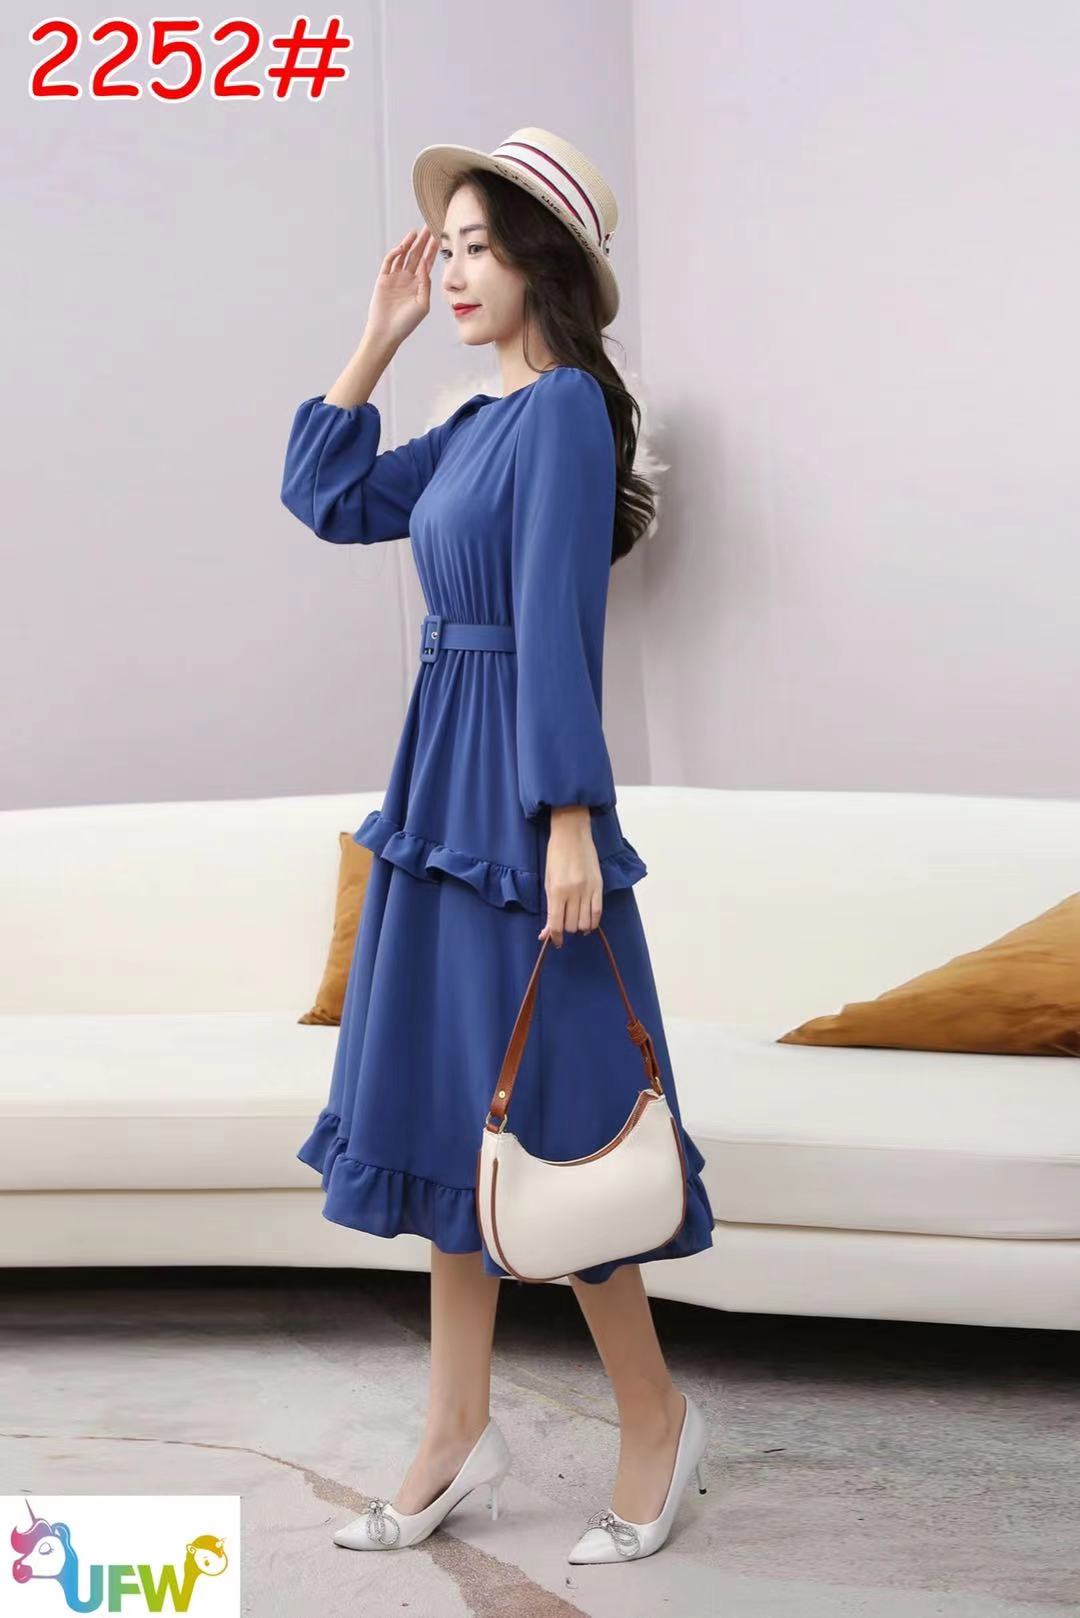 XLH FASHION] #2252 Women's Fashionable Casual Long Sleeve Chiffon Dress  with Belt